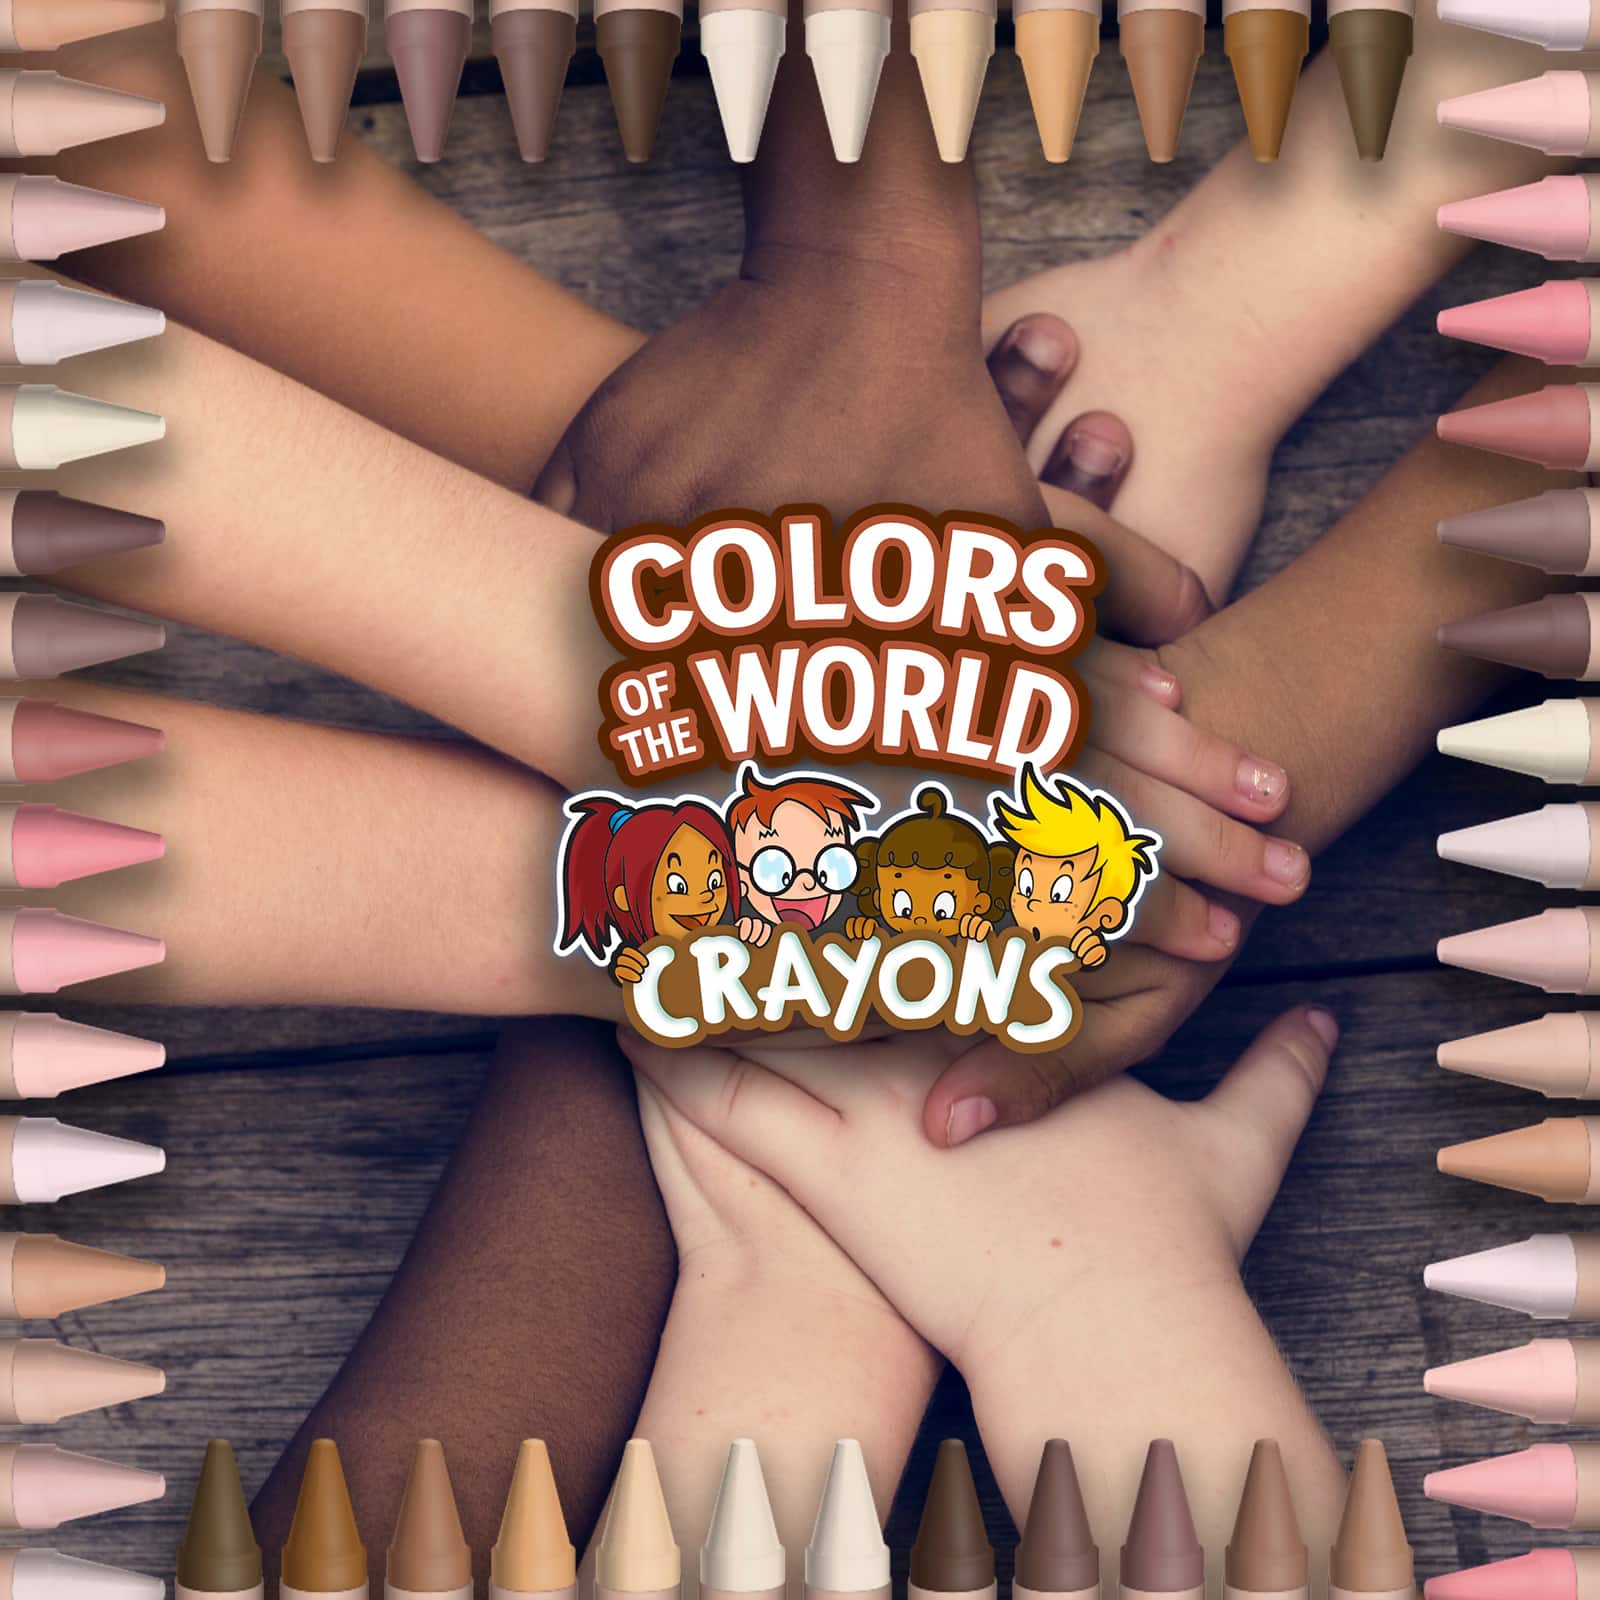 Crayola&#xAE; Colors of the World&#x2122; Skin Tone Crayons